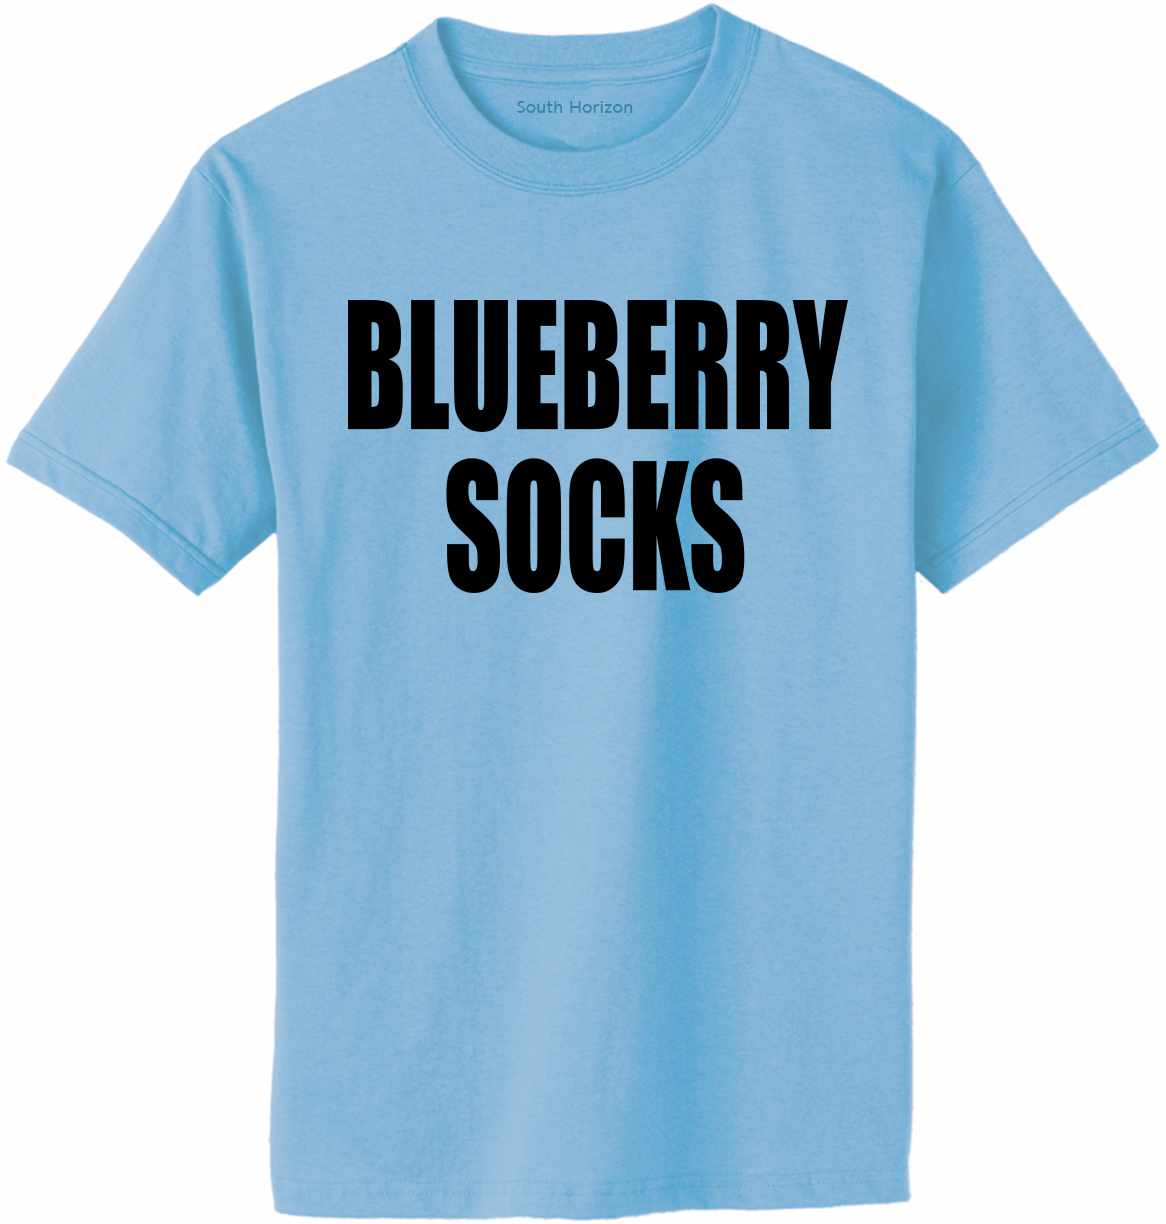 BLUEBERRY SOCKS Adult T-Shirt